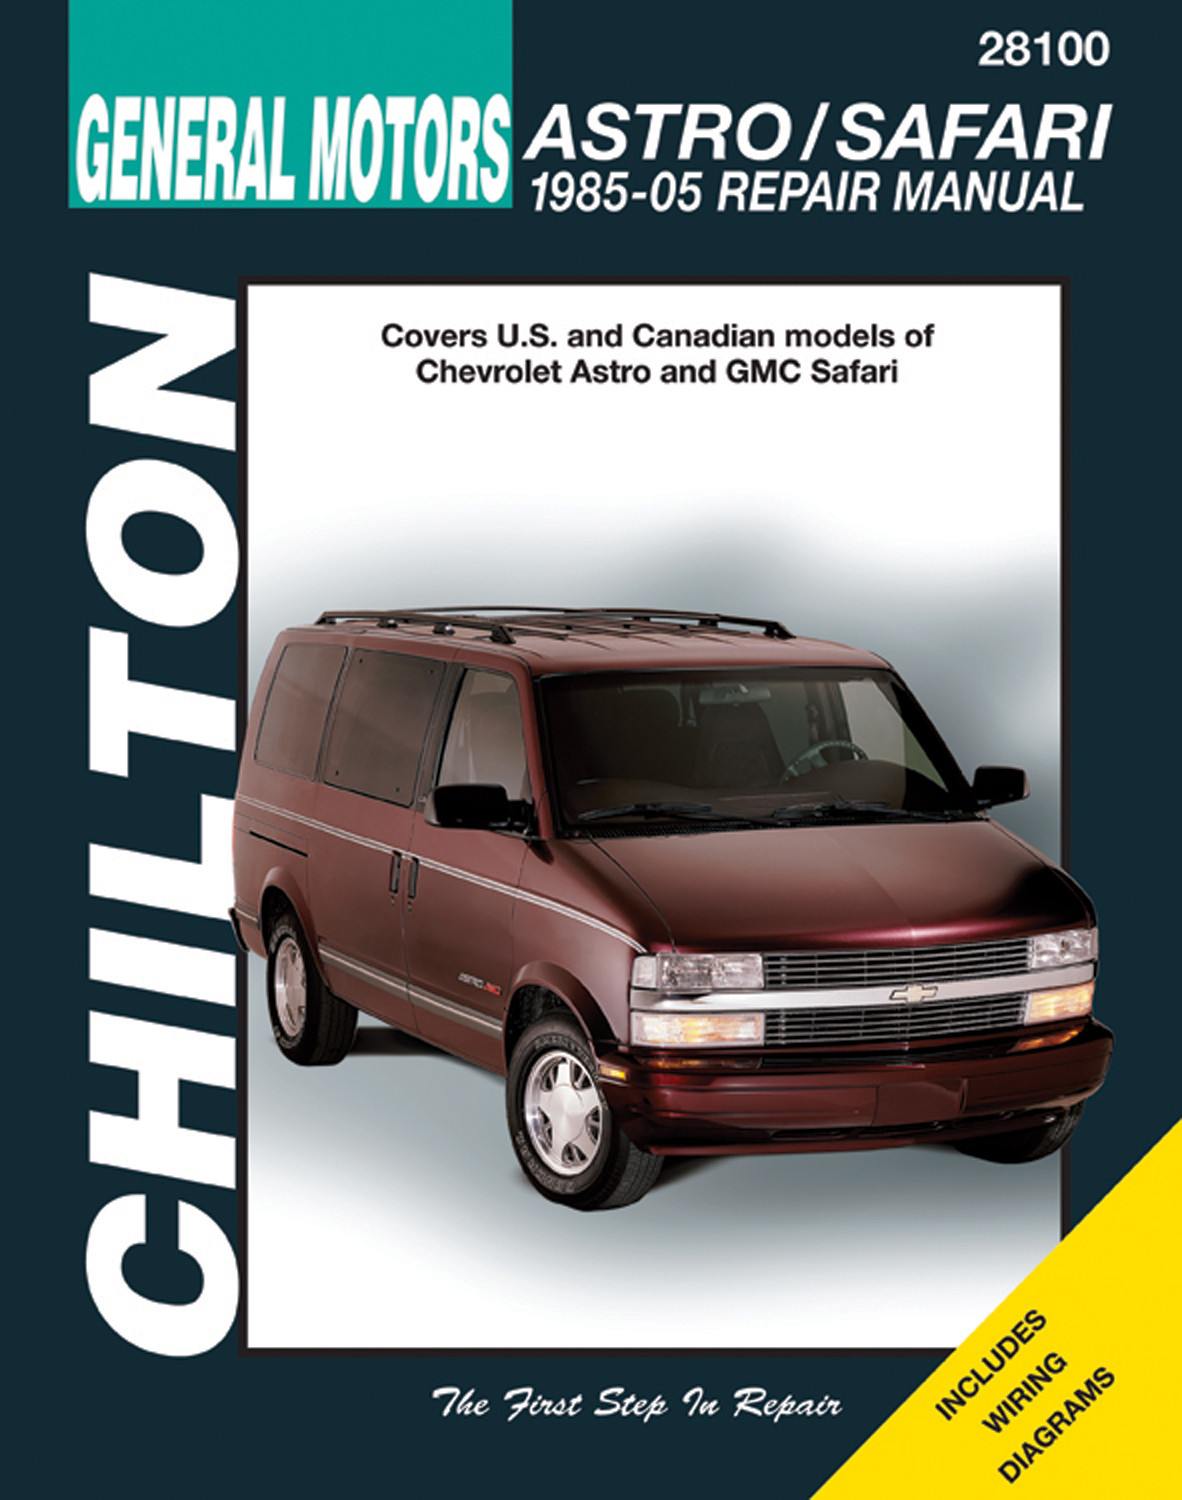 Chevy Astro Repair Manual Pdf